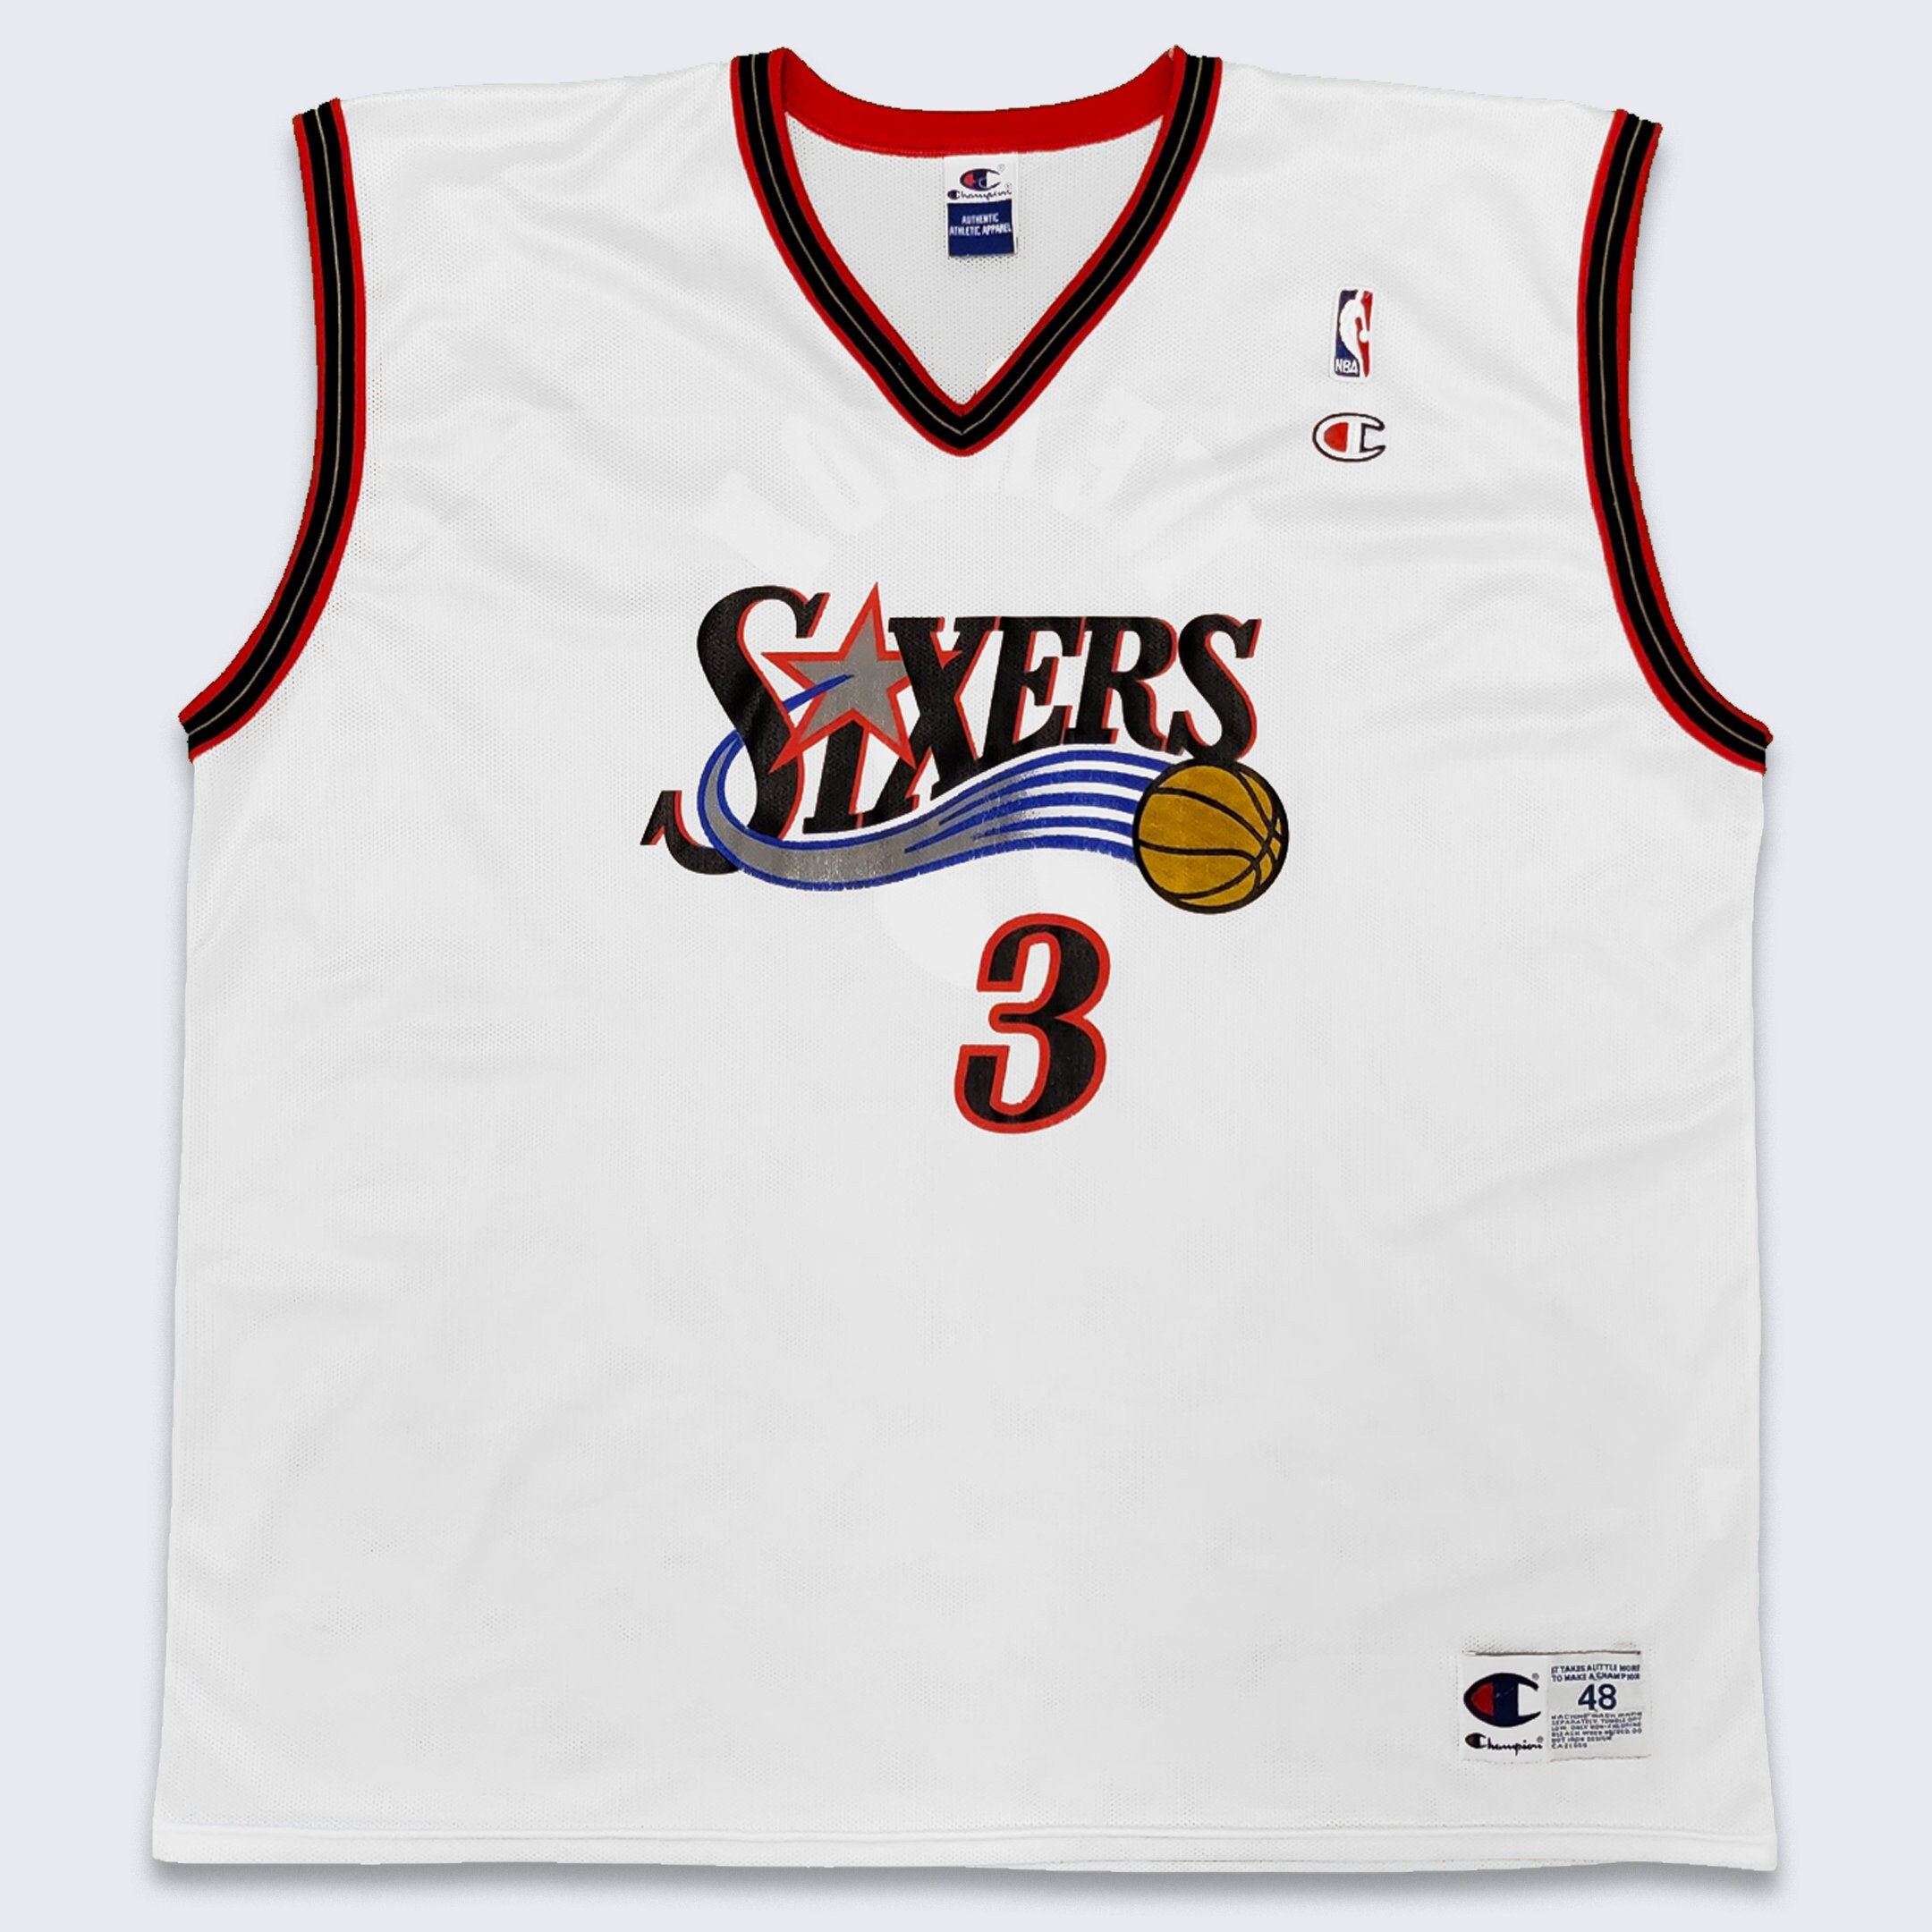 Vintage Allen Iverson Philadelphia 76ers champion jersey size 48 XL